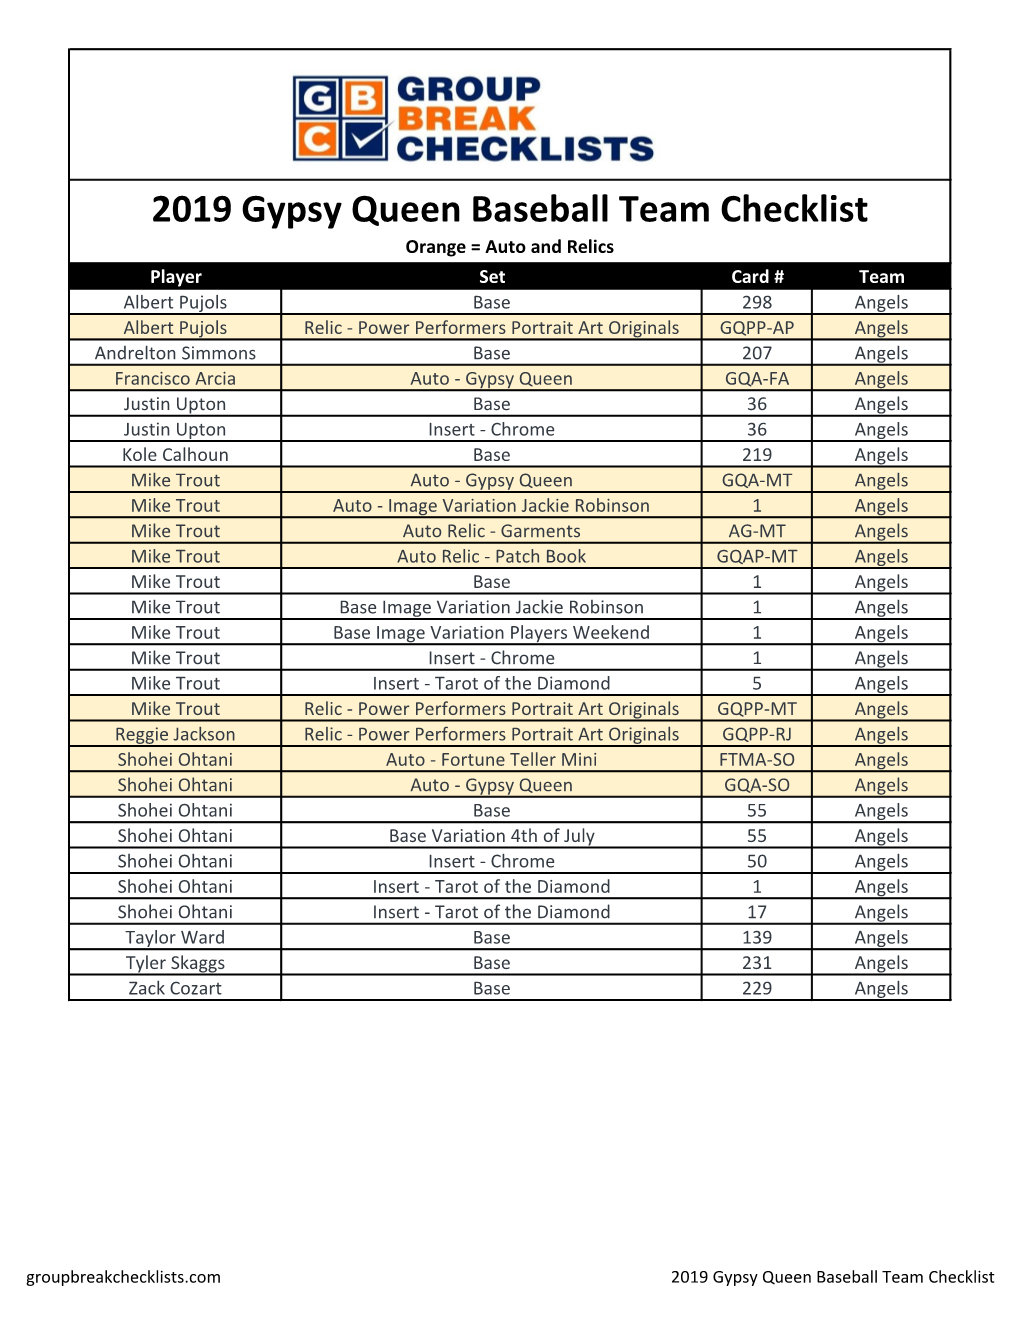 2019 Topps Gypsy Queen Baseball Checklist